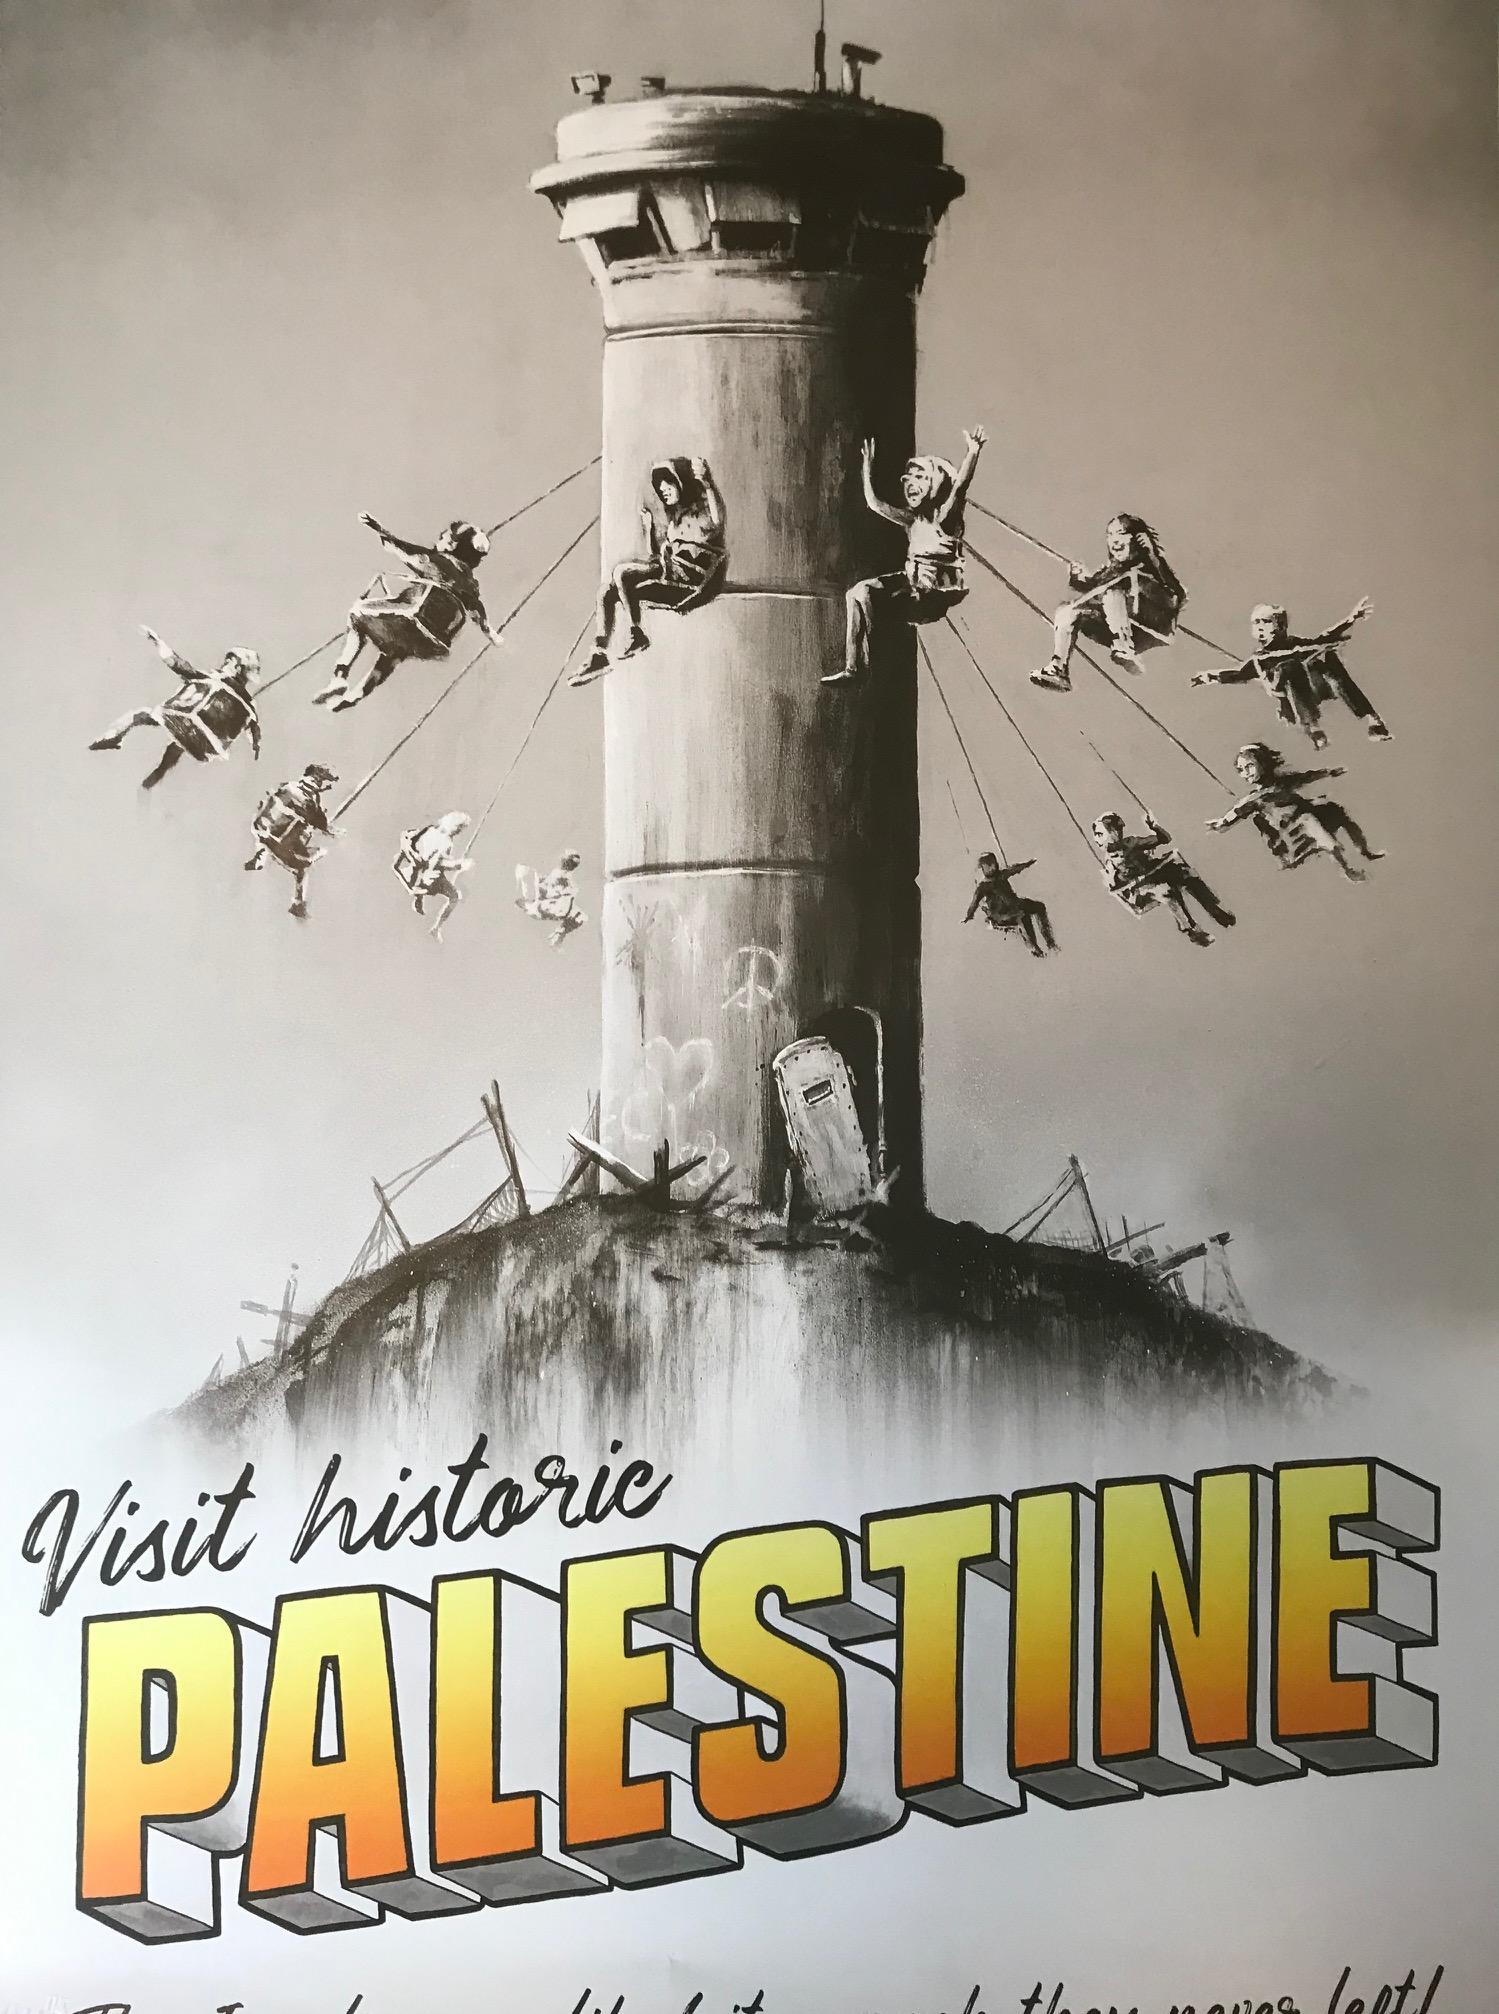 banksy visit historic palestine